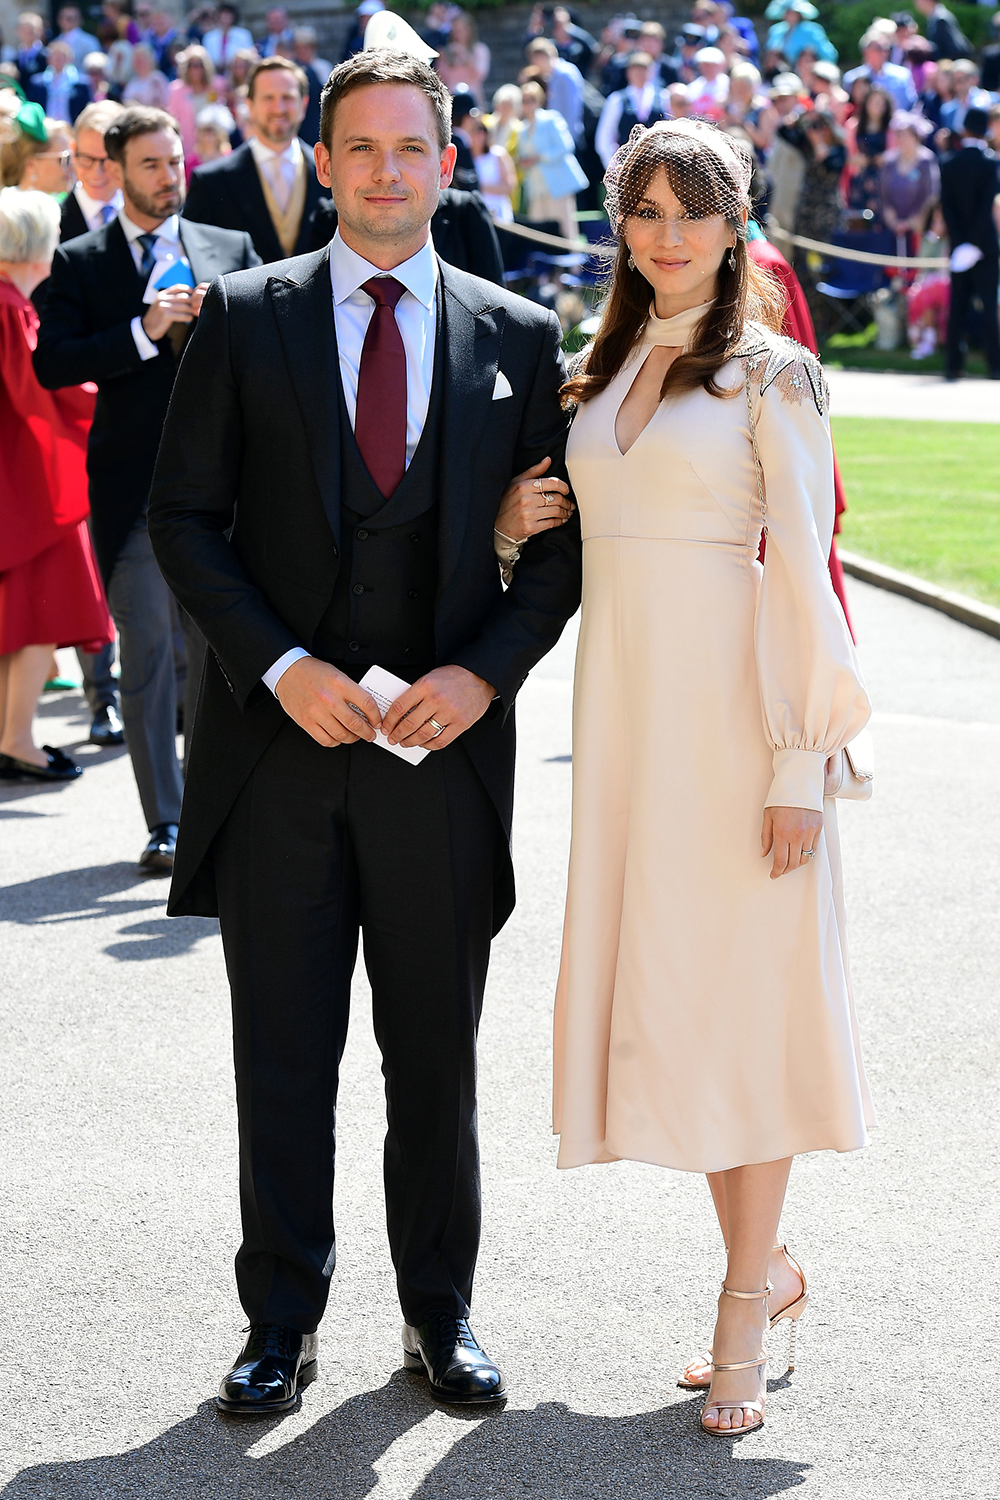 Image result for royal wedding guests